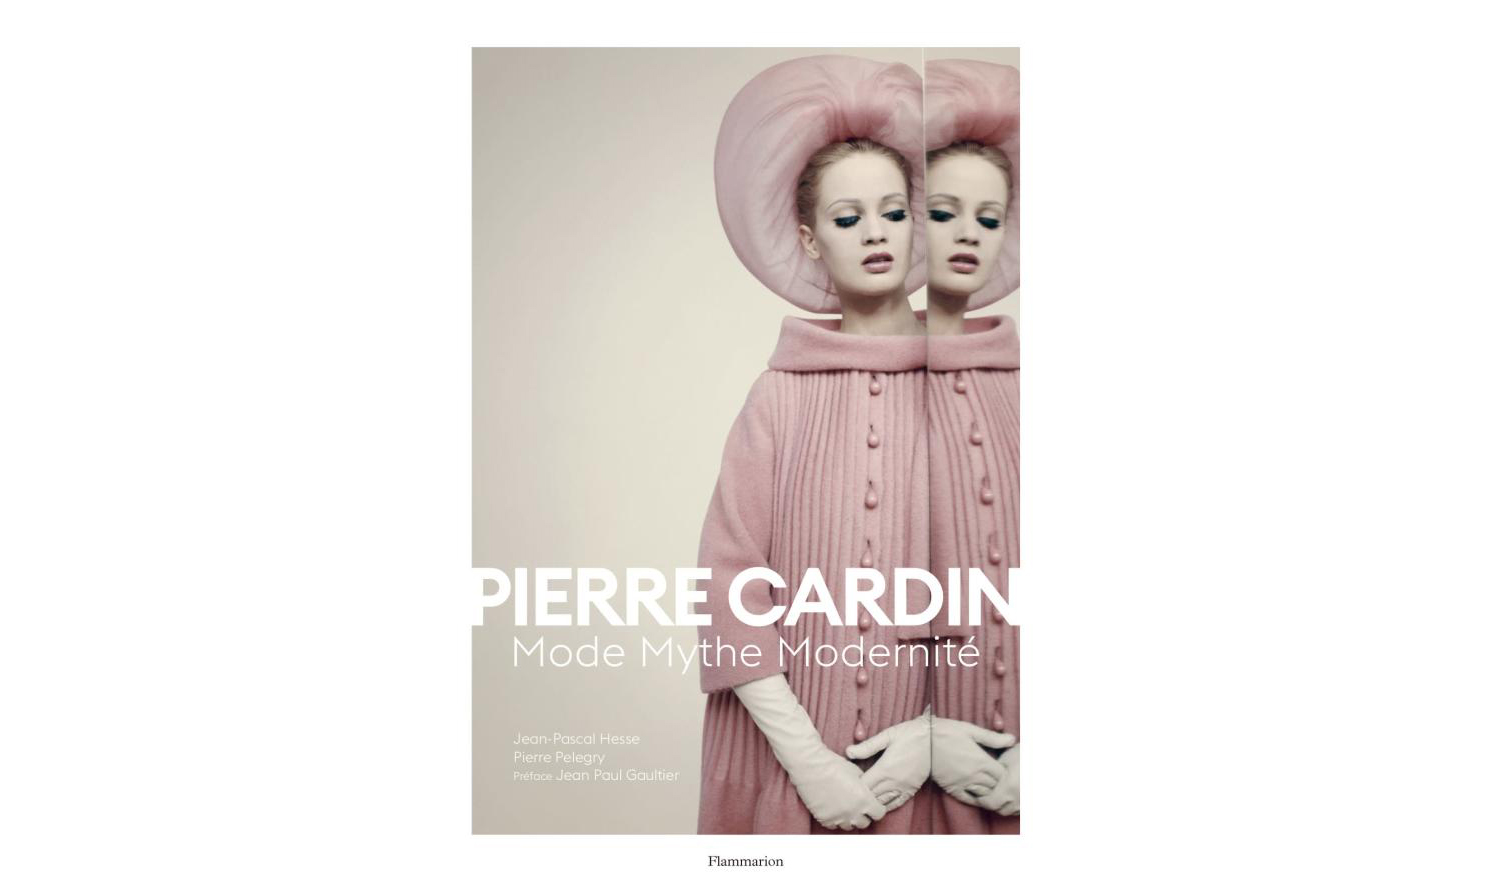 纪念 Pierre Cardin 百年诞辰，书籍《Pierre Cardin: Fashion, Myth, Modernity》即将出版